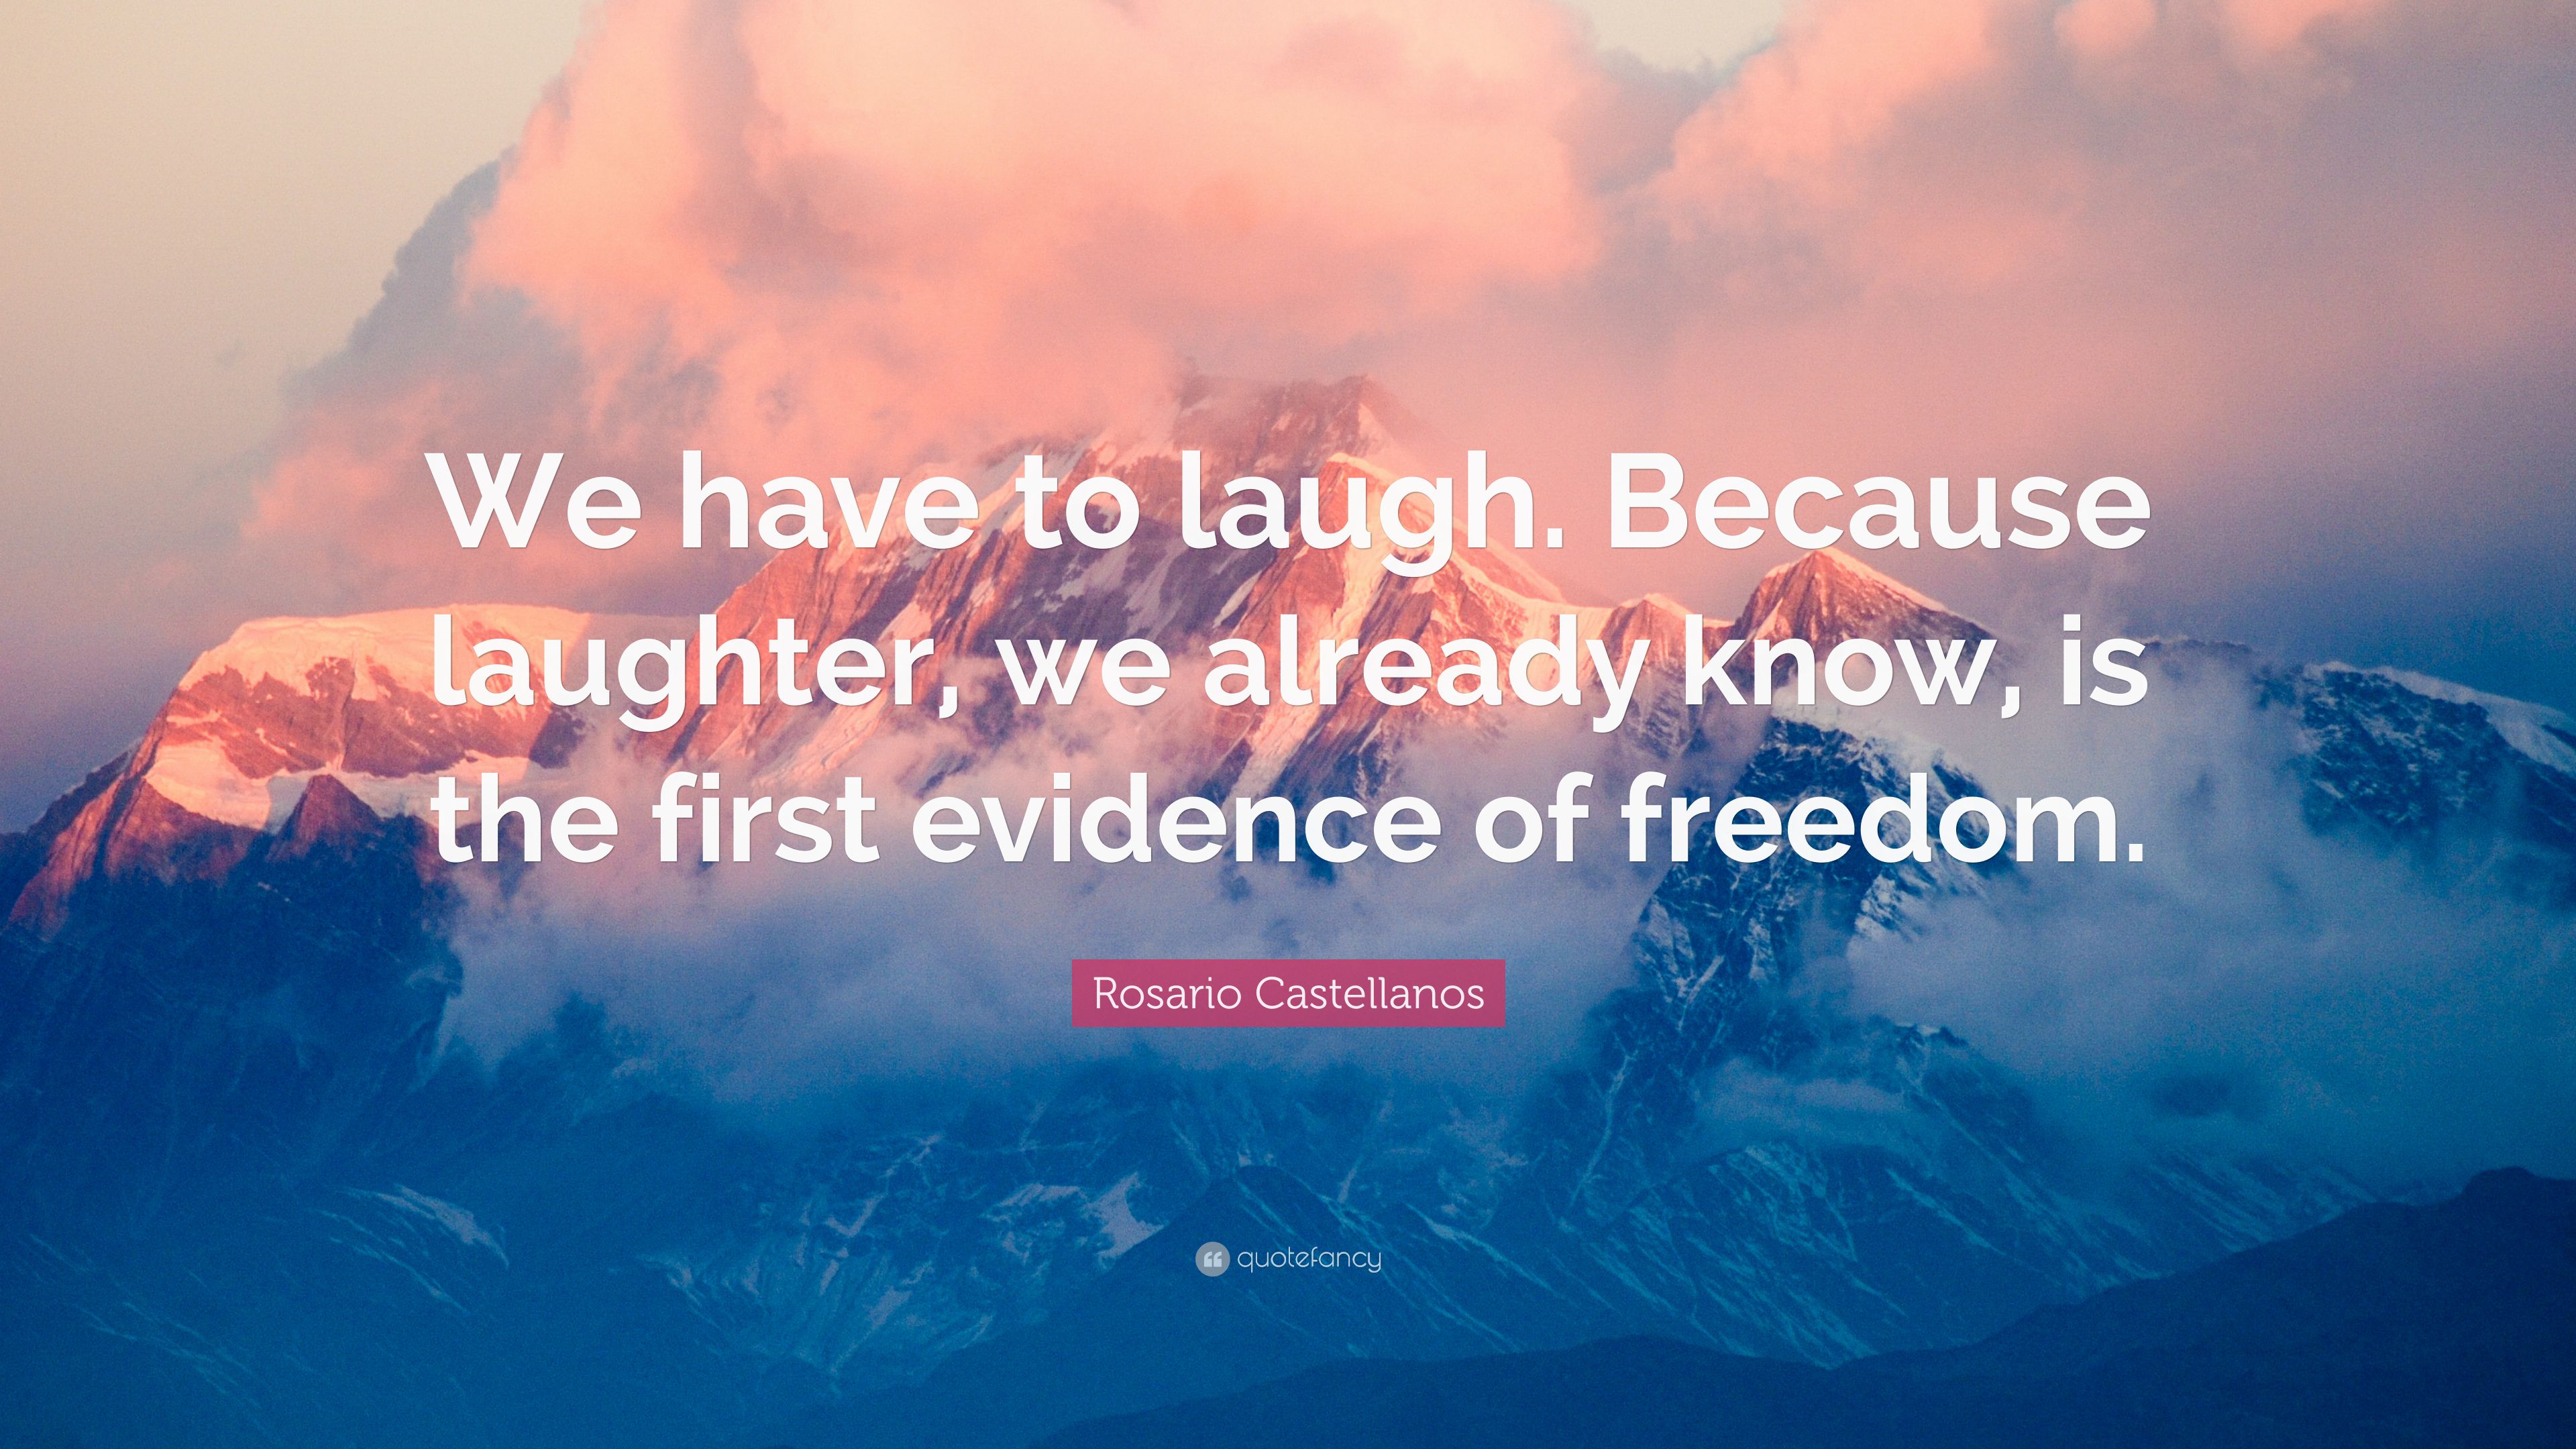 Rosario Castellanos Quote: “We have to laugh. Because laughter, we